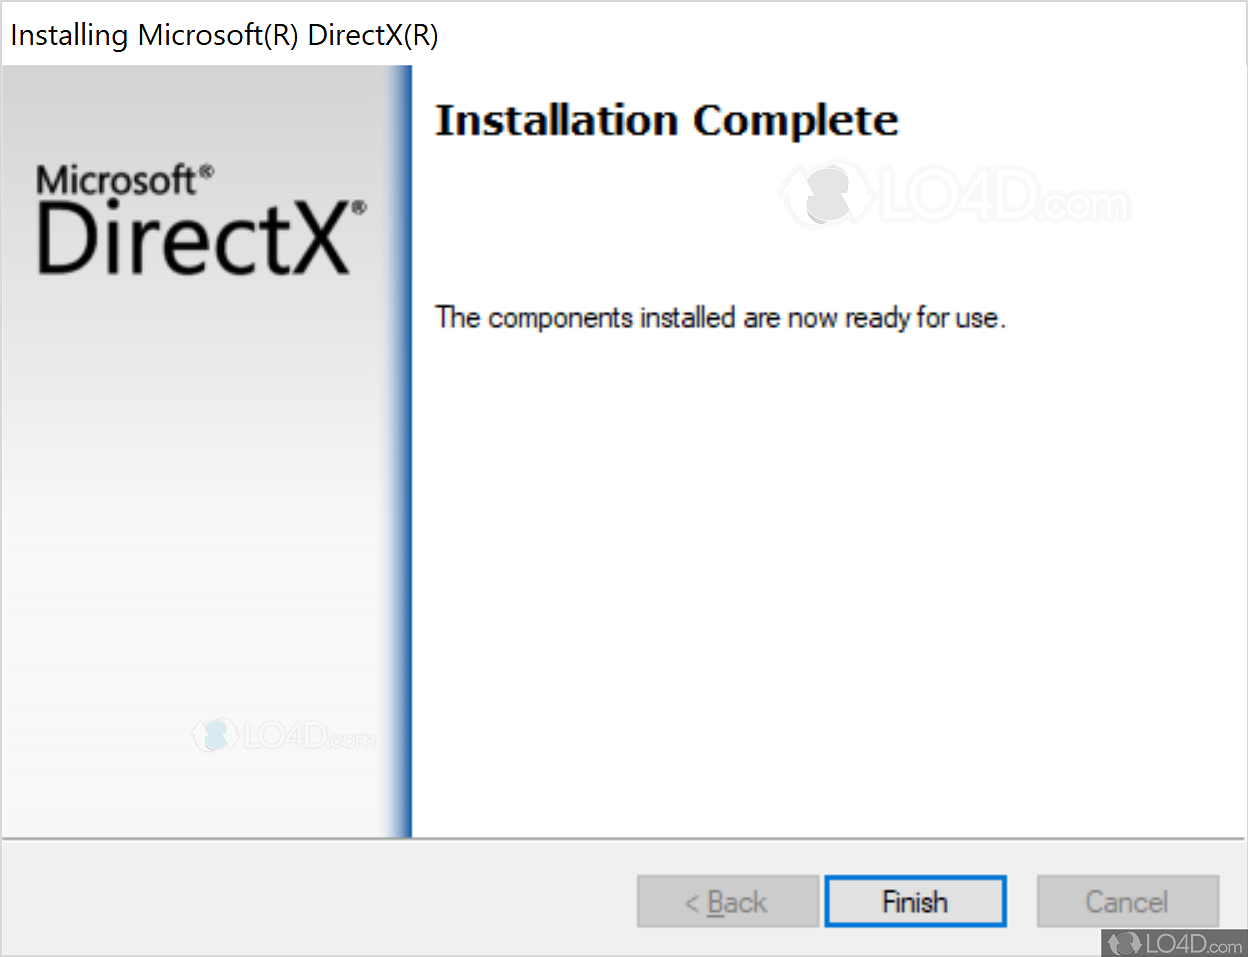 directx end user runtime web installer download